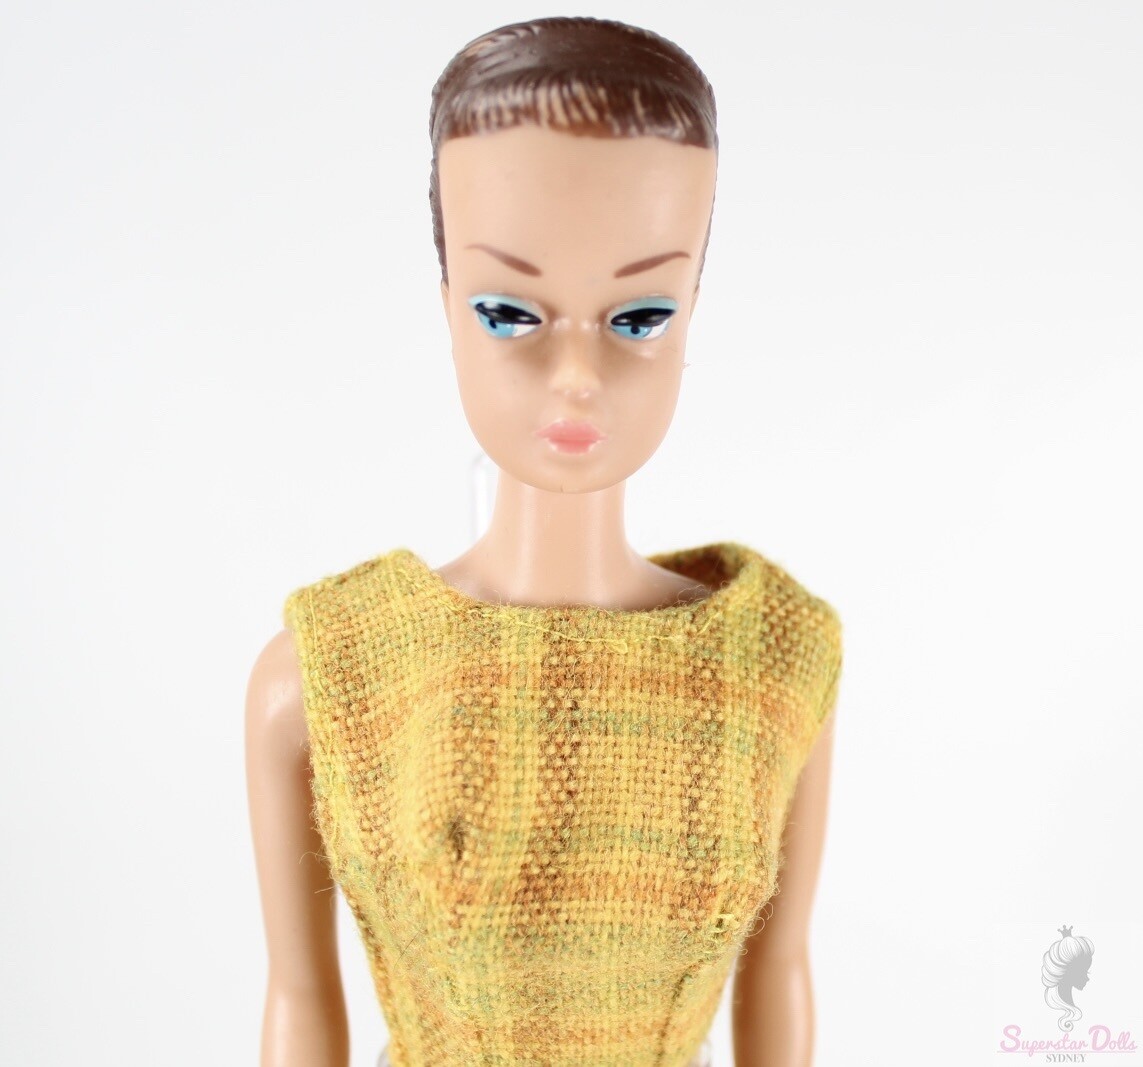 Vintage 1960's Fashion Queen Barbie Doll